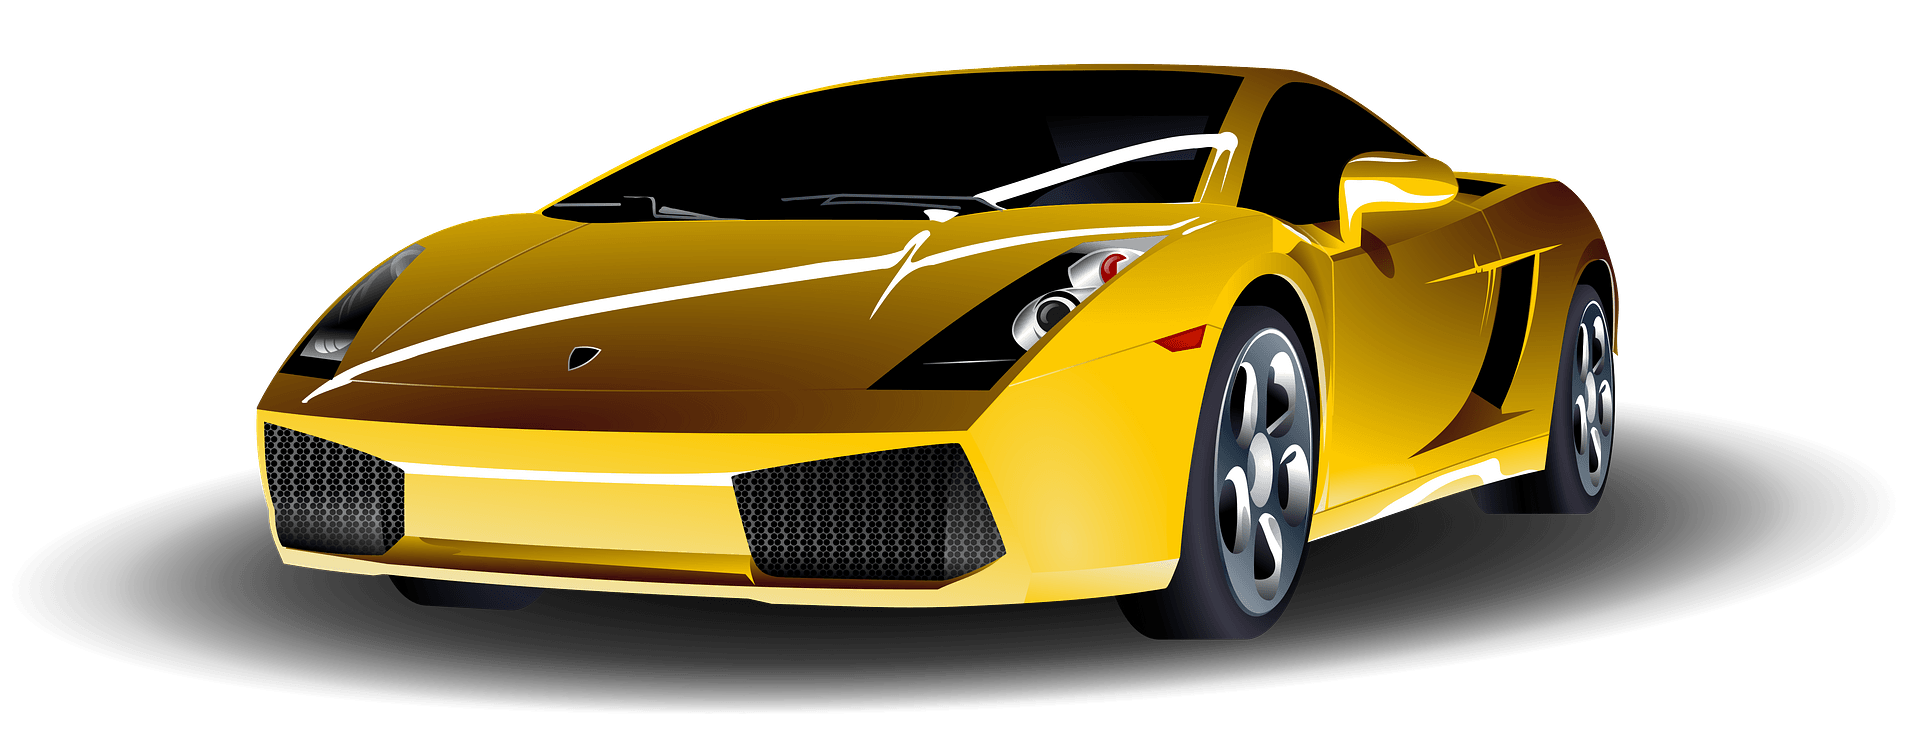 Yellow Lamborghini Convertible PNG Pic